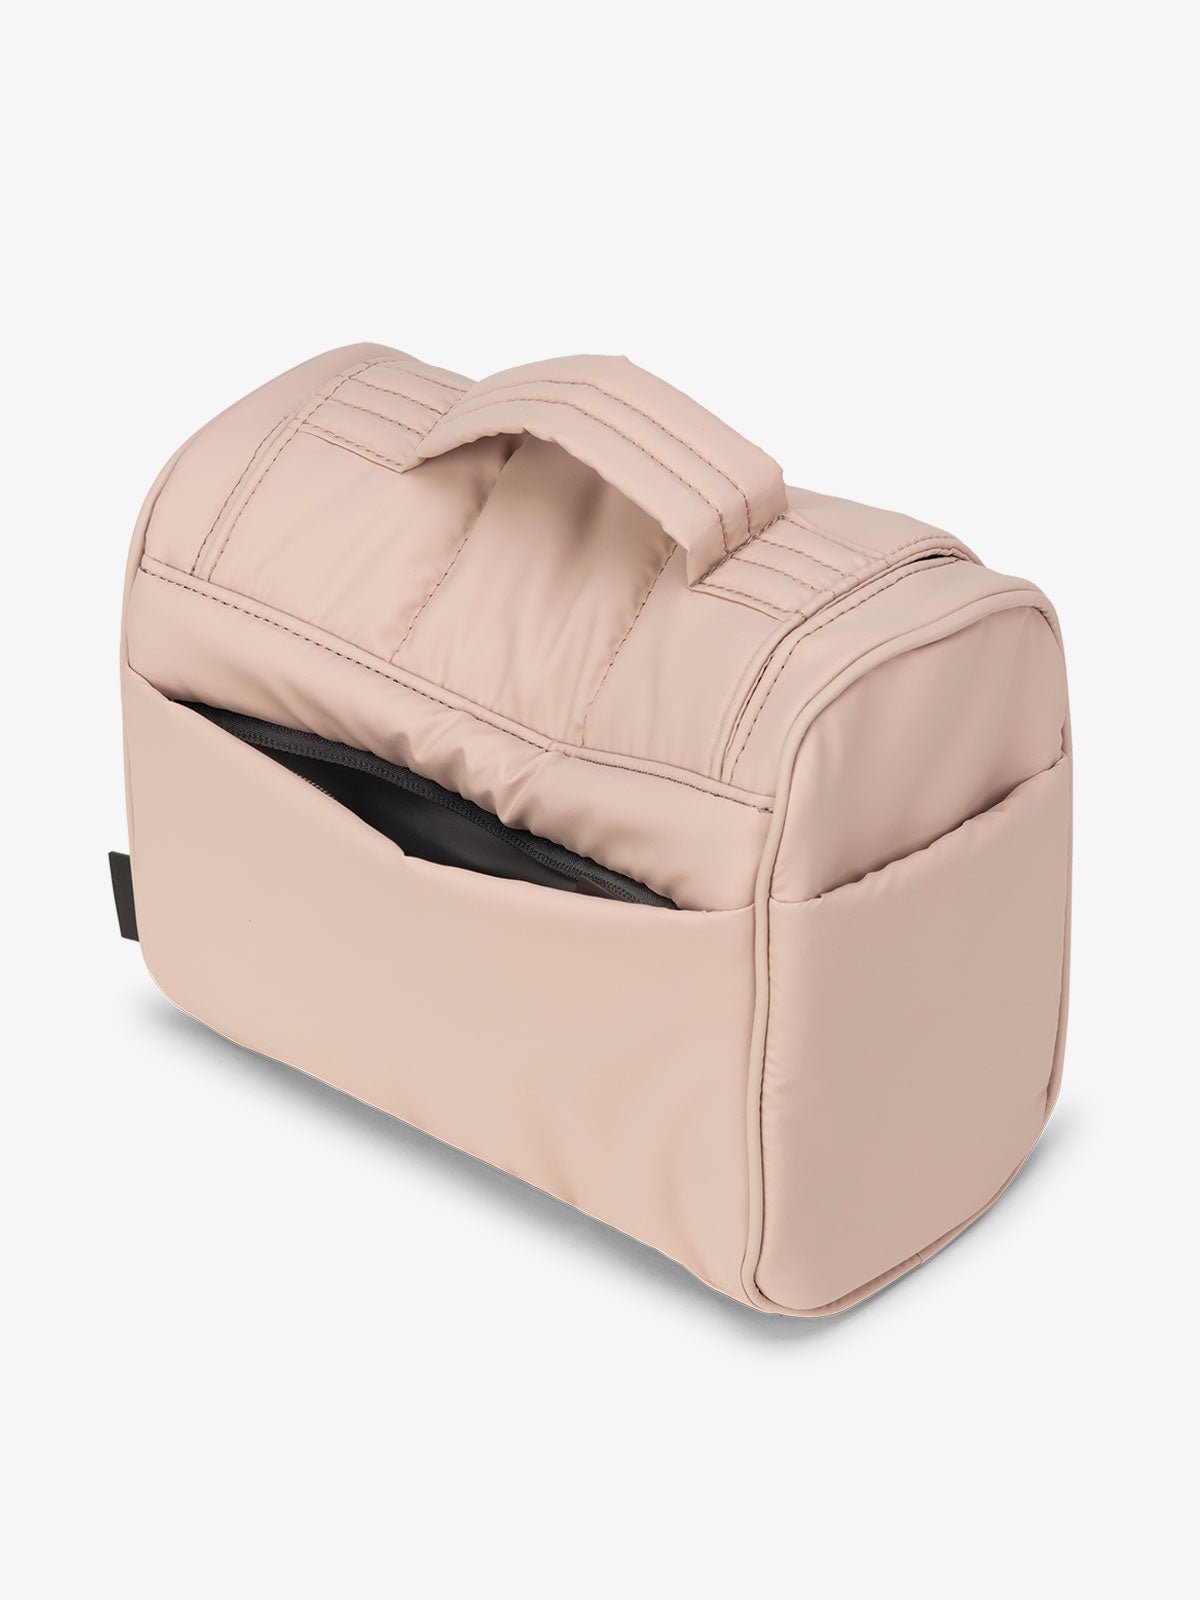 Light pink CALPAK Luka Hanging Toiletry Bag featuring additional secure zippered back pocket